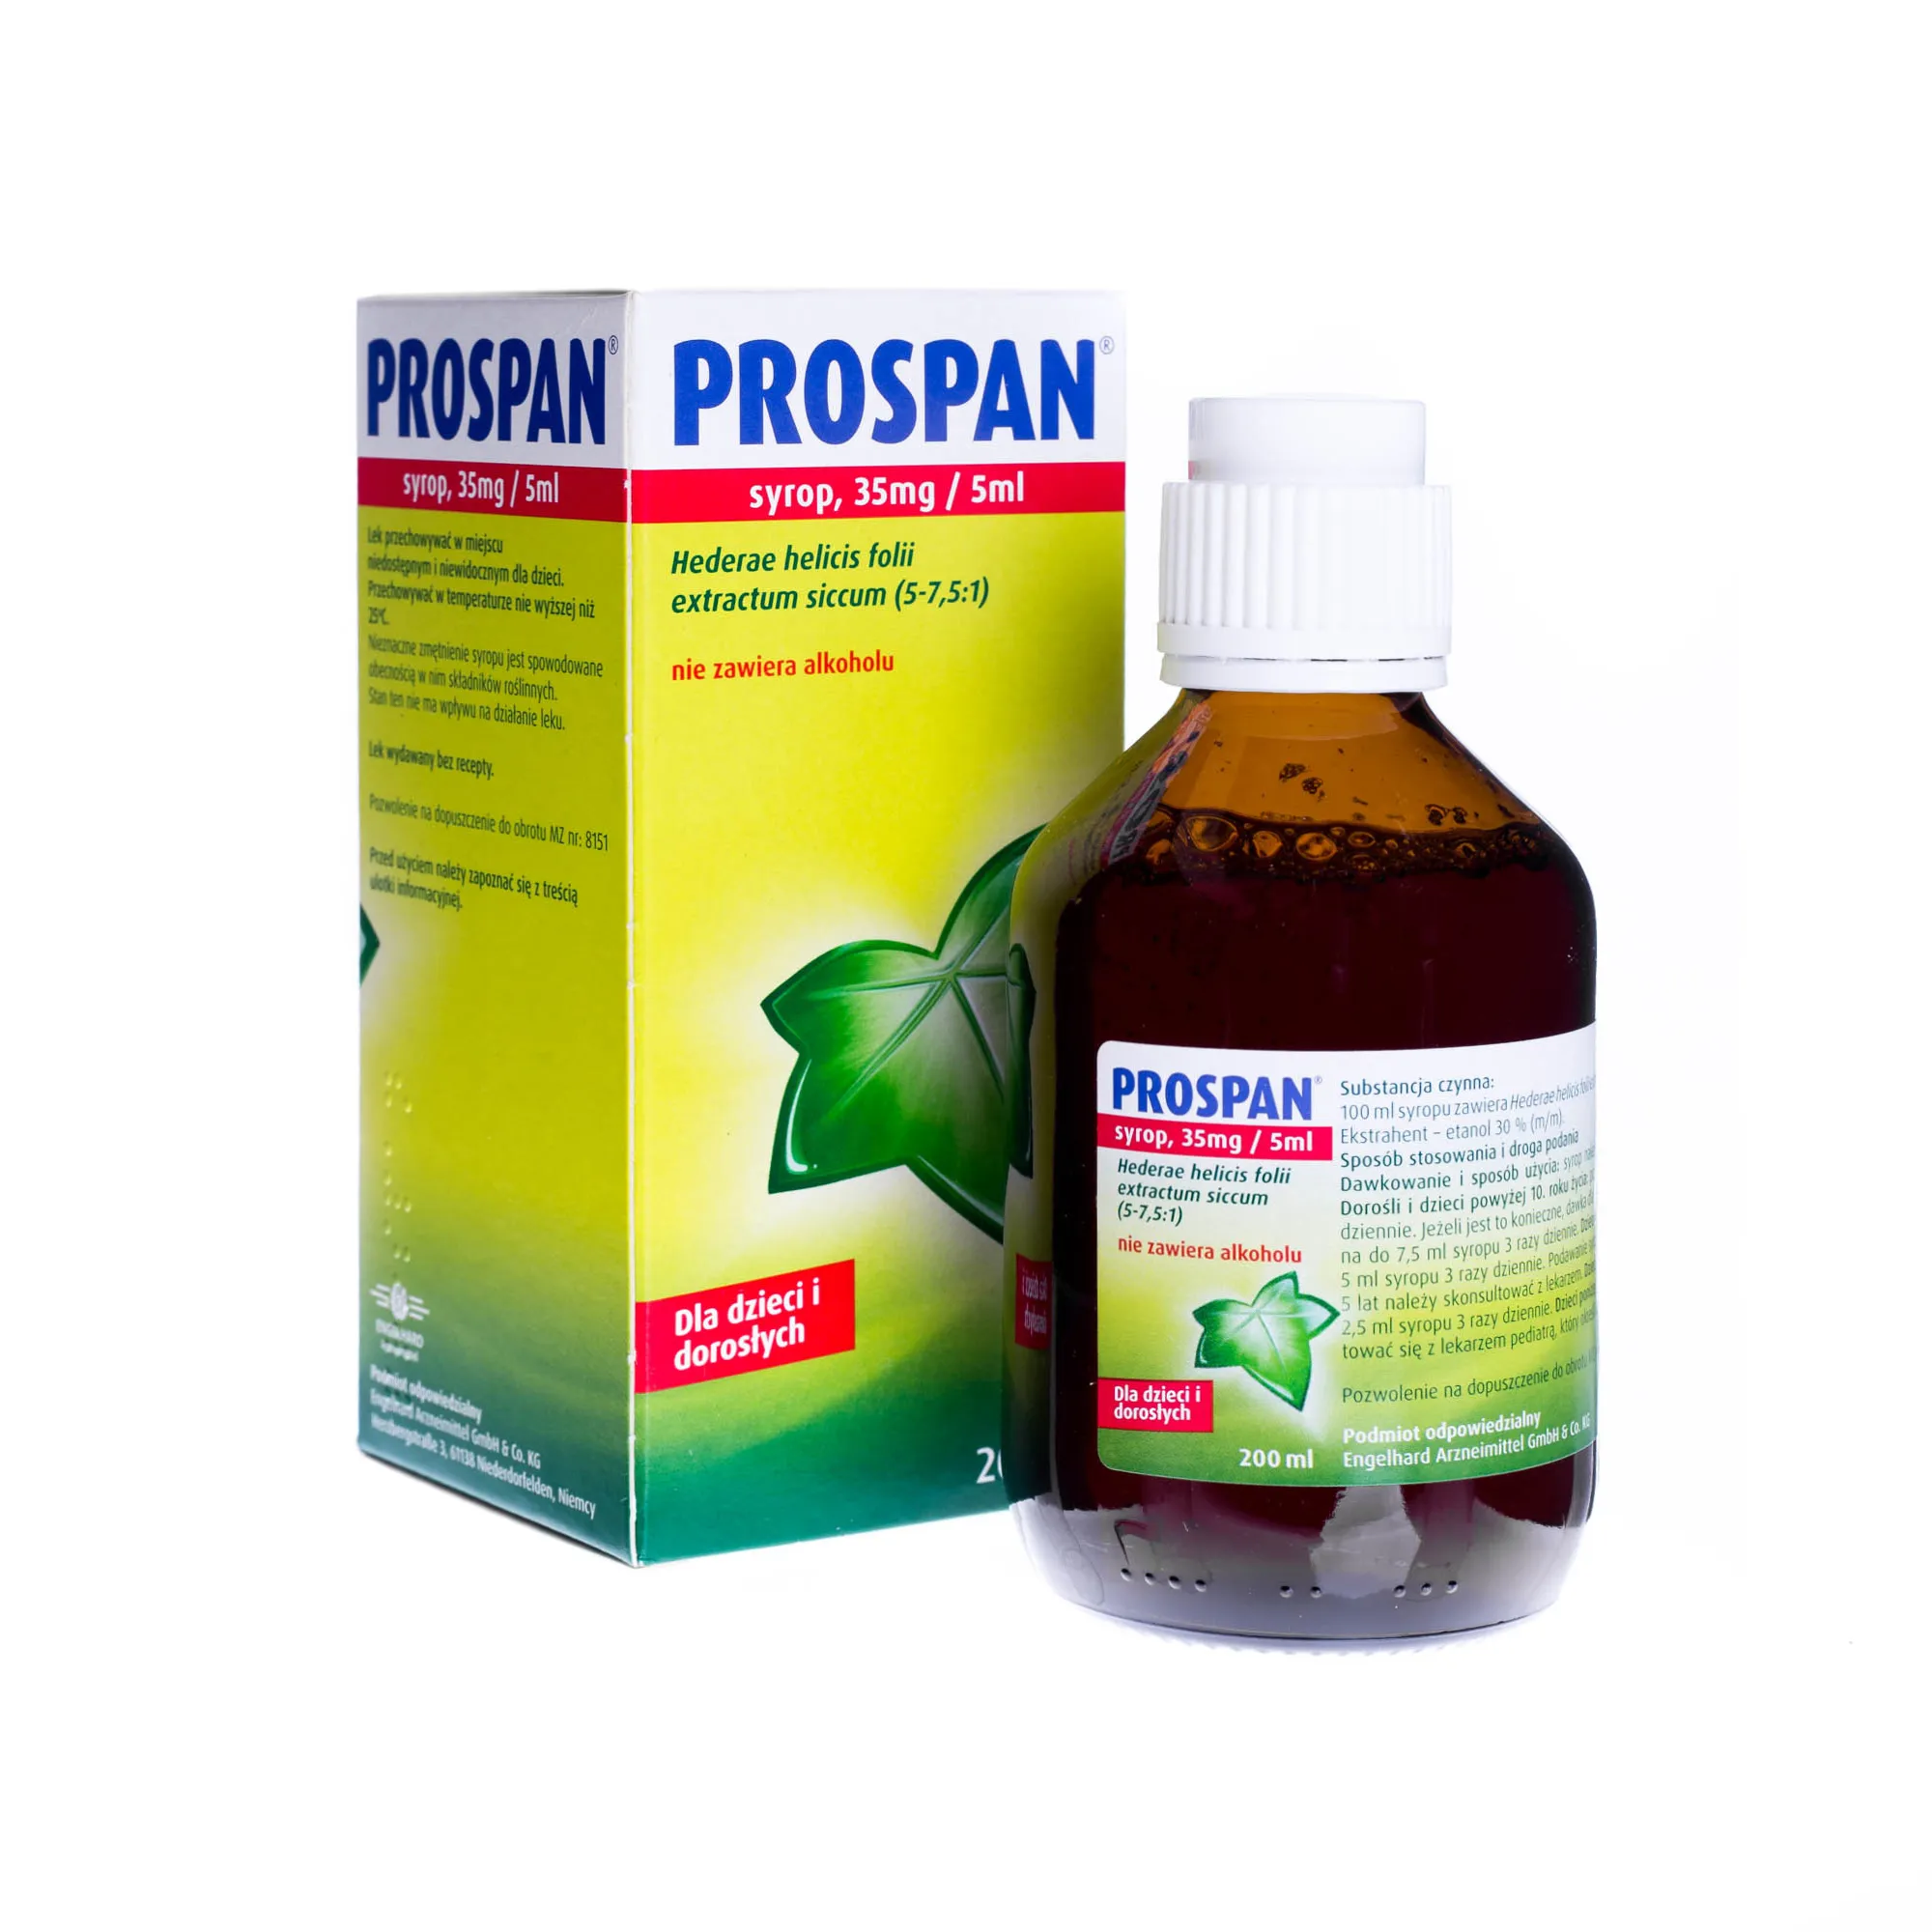 Prospan 35 mg/5 ml, 200 ml 